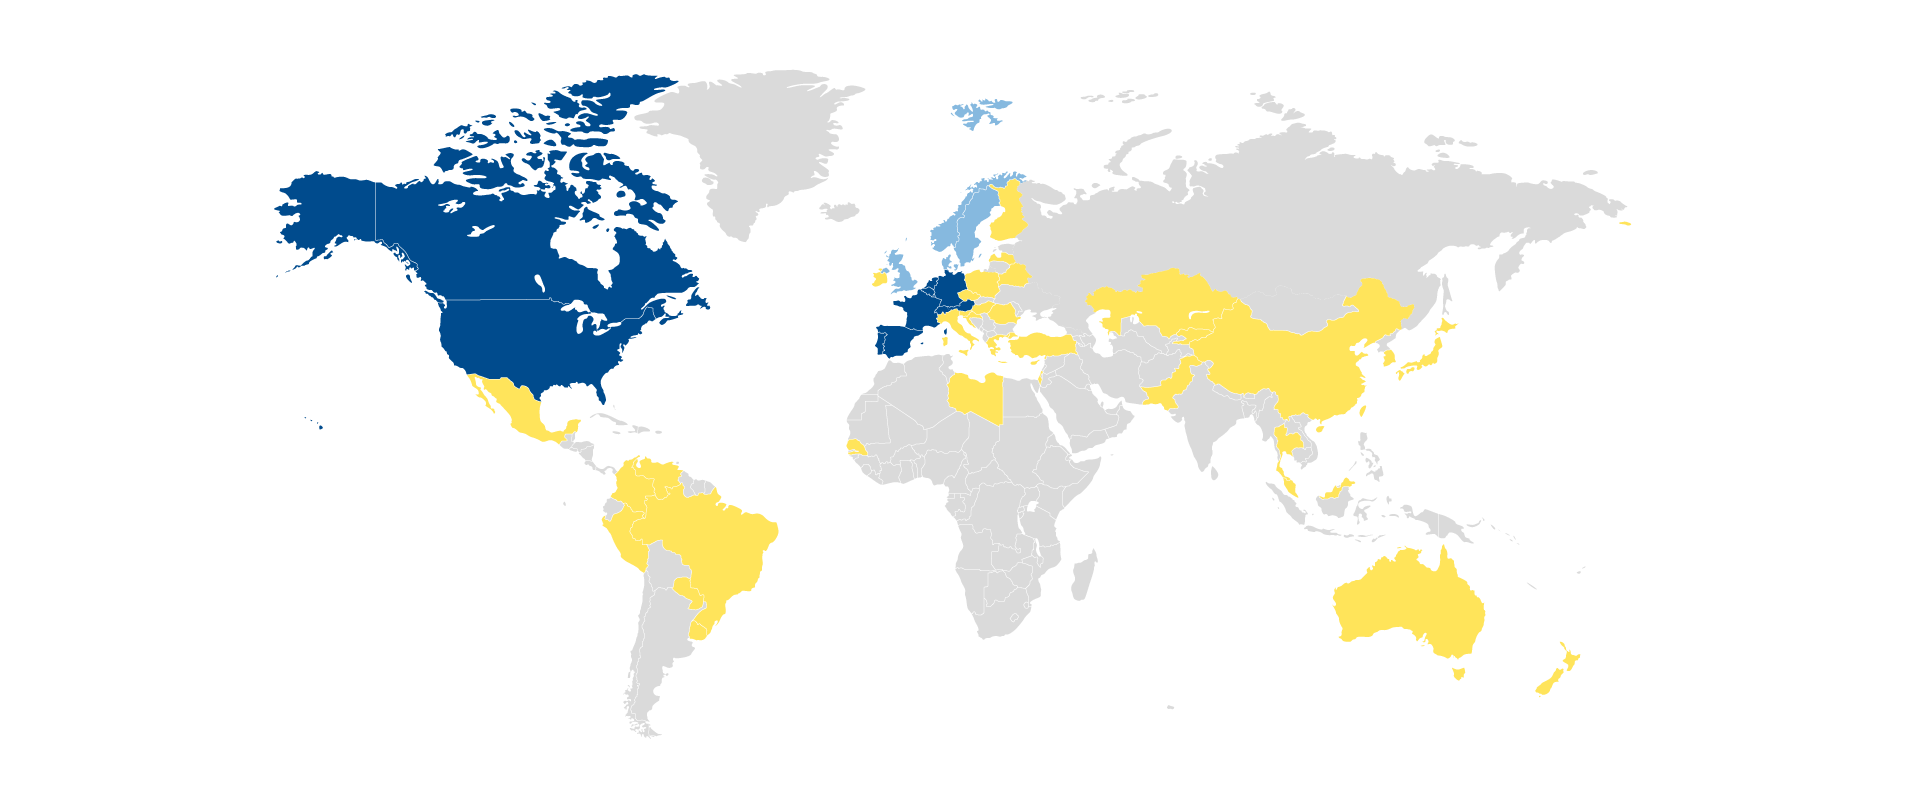 nexmart World Map